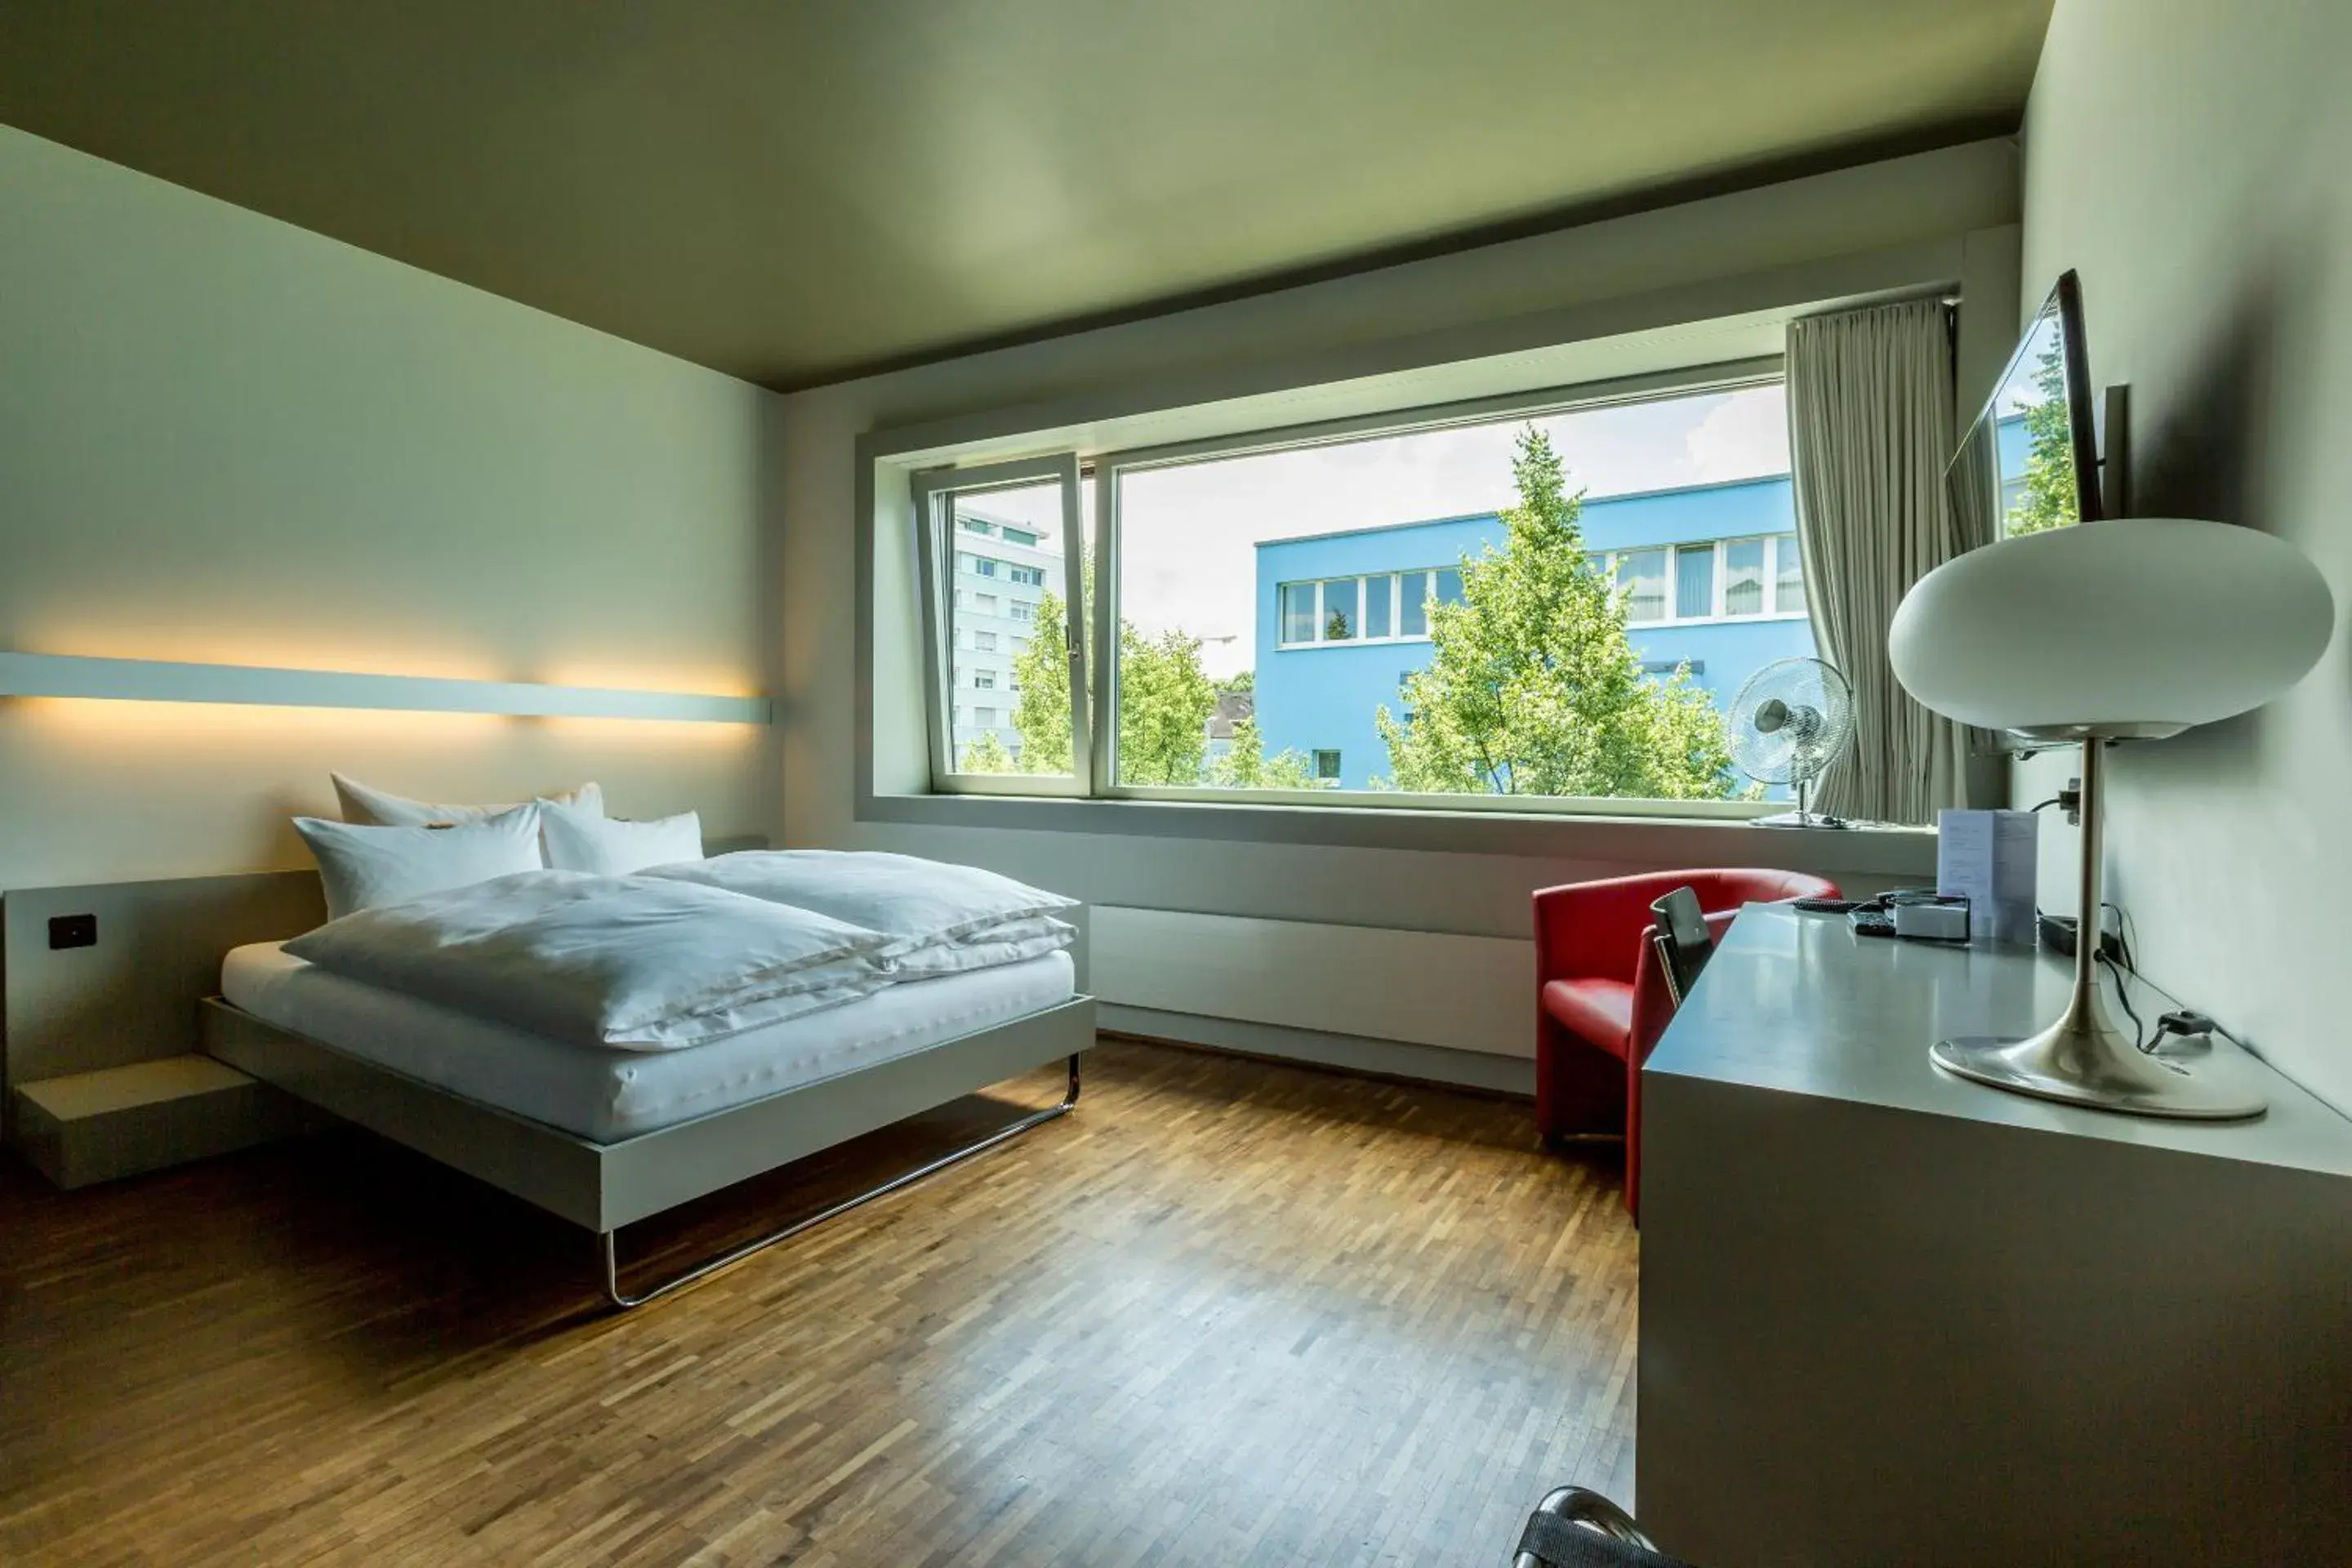 Photo of the whole room in dasbreitehotel am Rhein